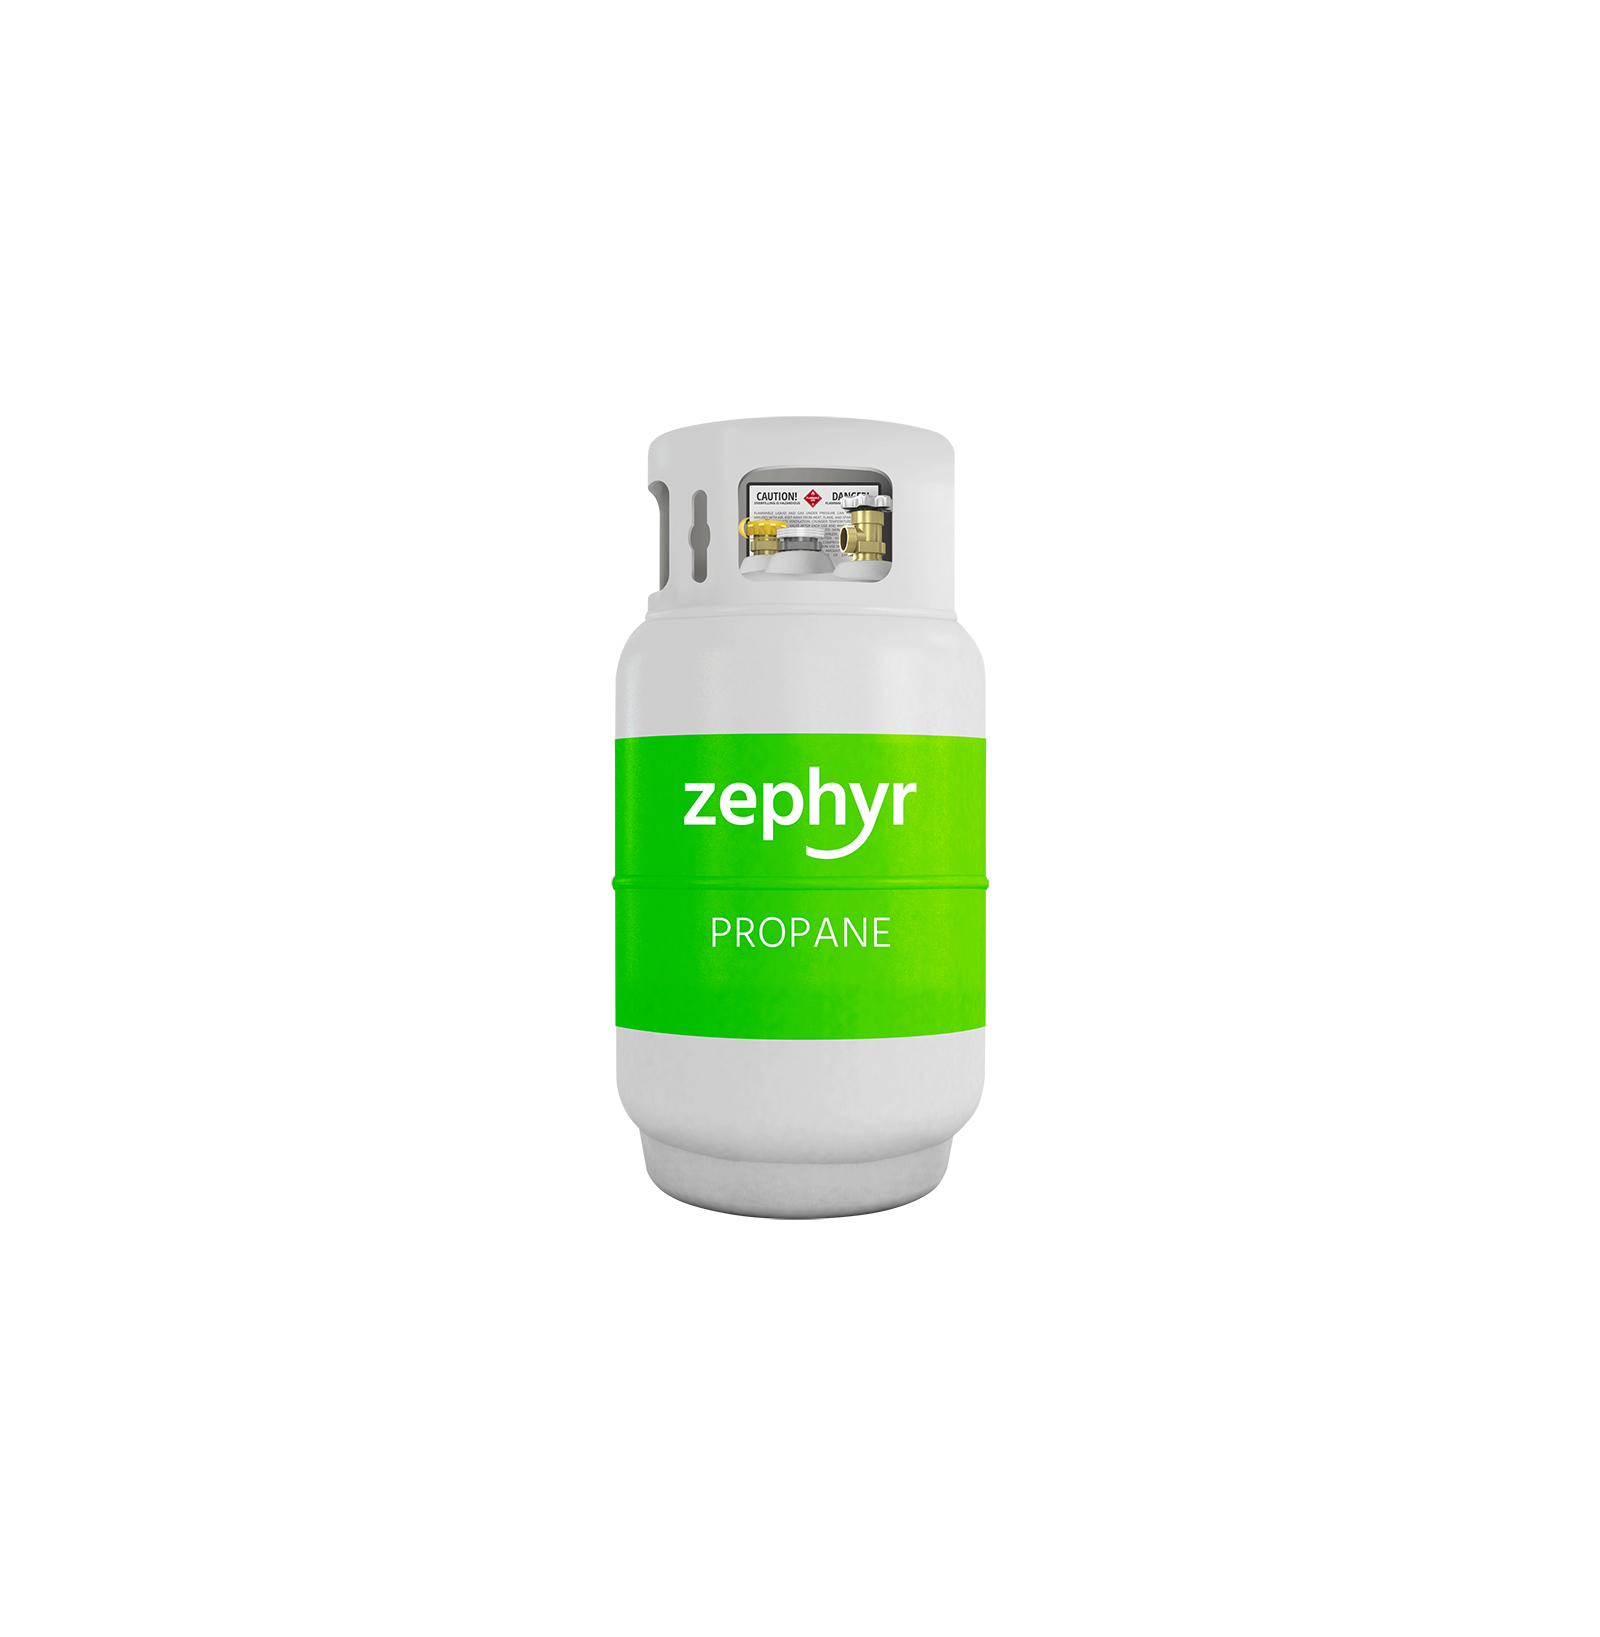 Zephyr propane tank 20lb